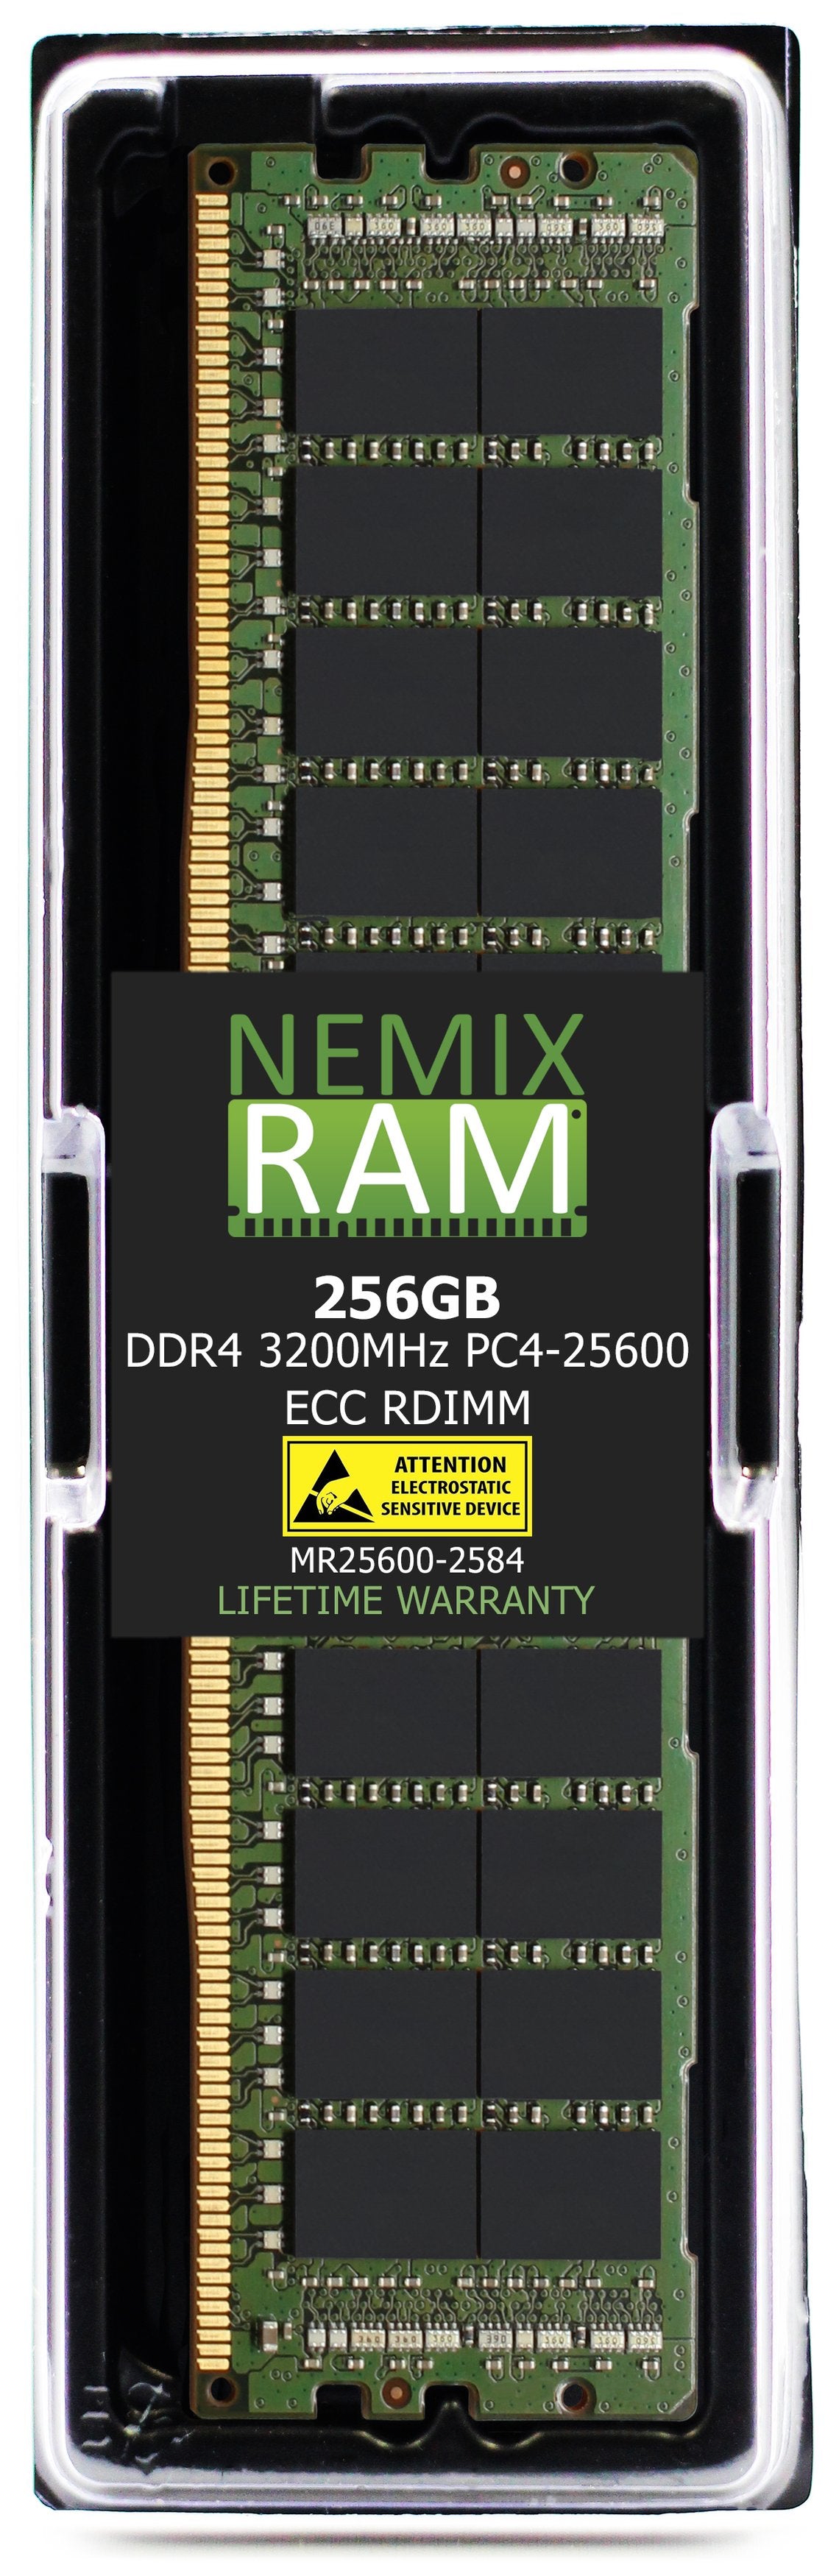 256GB DDR4 3200MHZ PC4-25600 RDIMM Compatible with Supermicro MEM-DR425MI-ER32